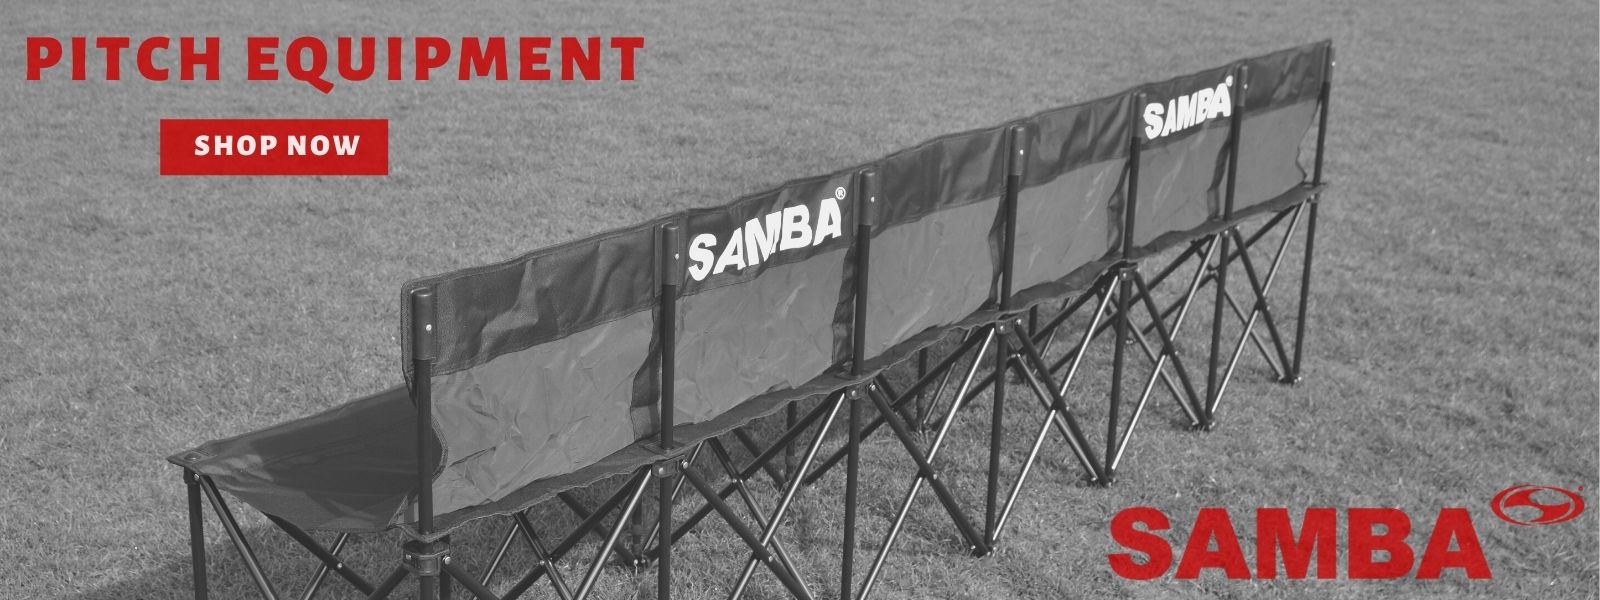 Samba pitch equipment